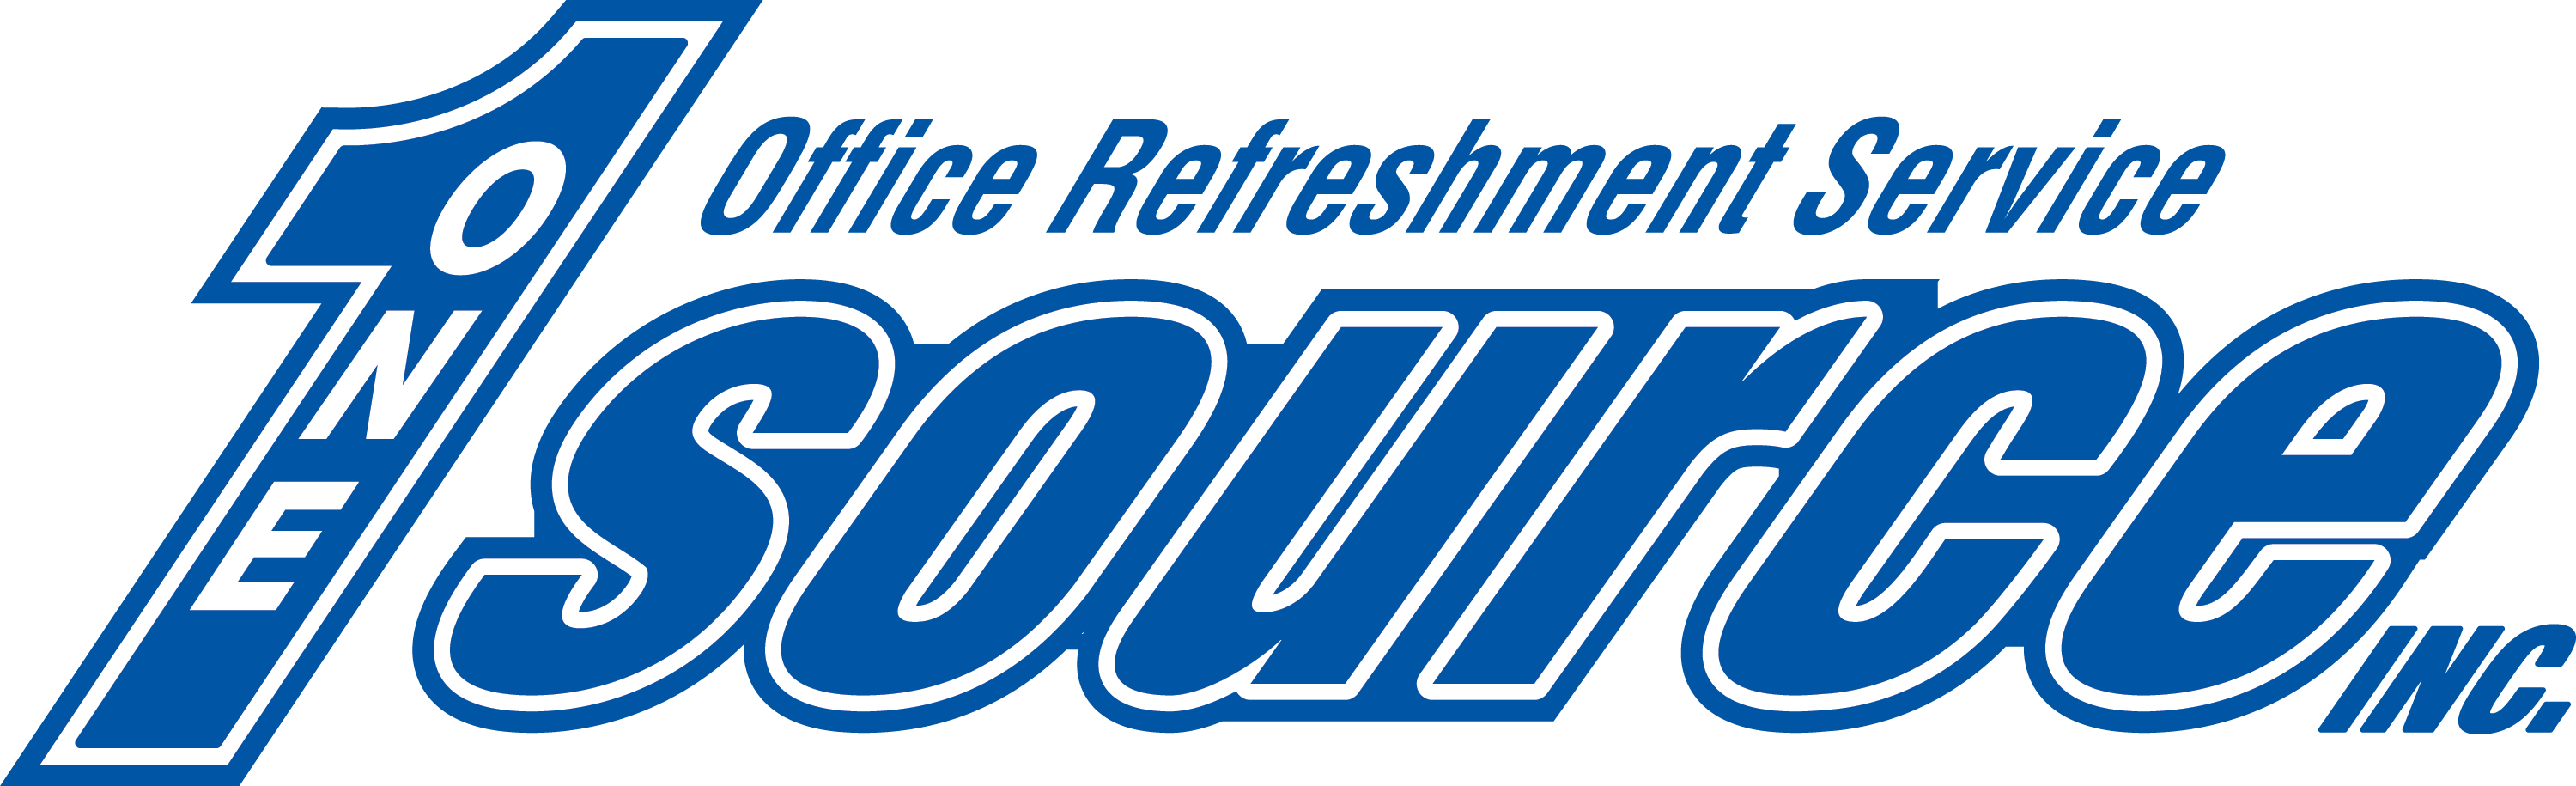 One Source Refreshment logo